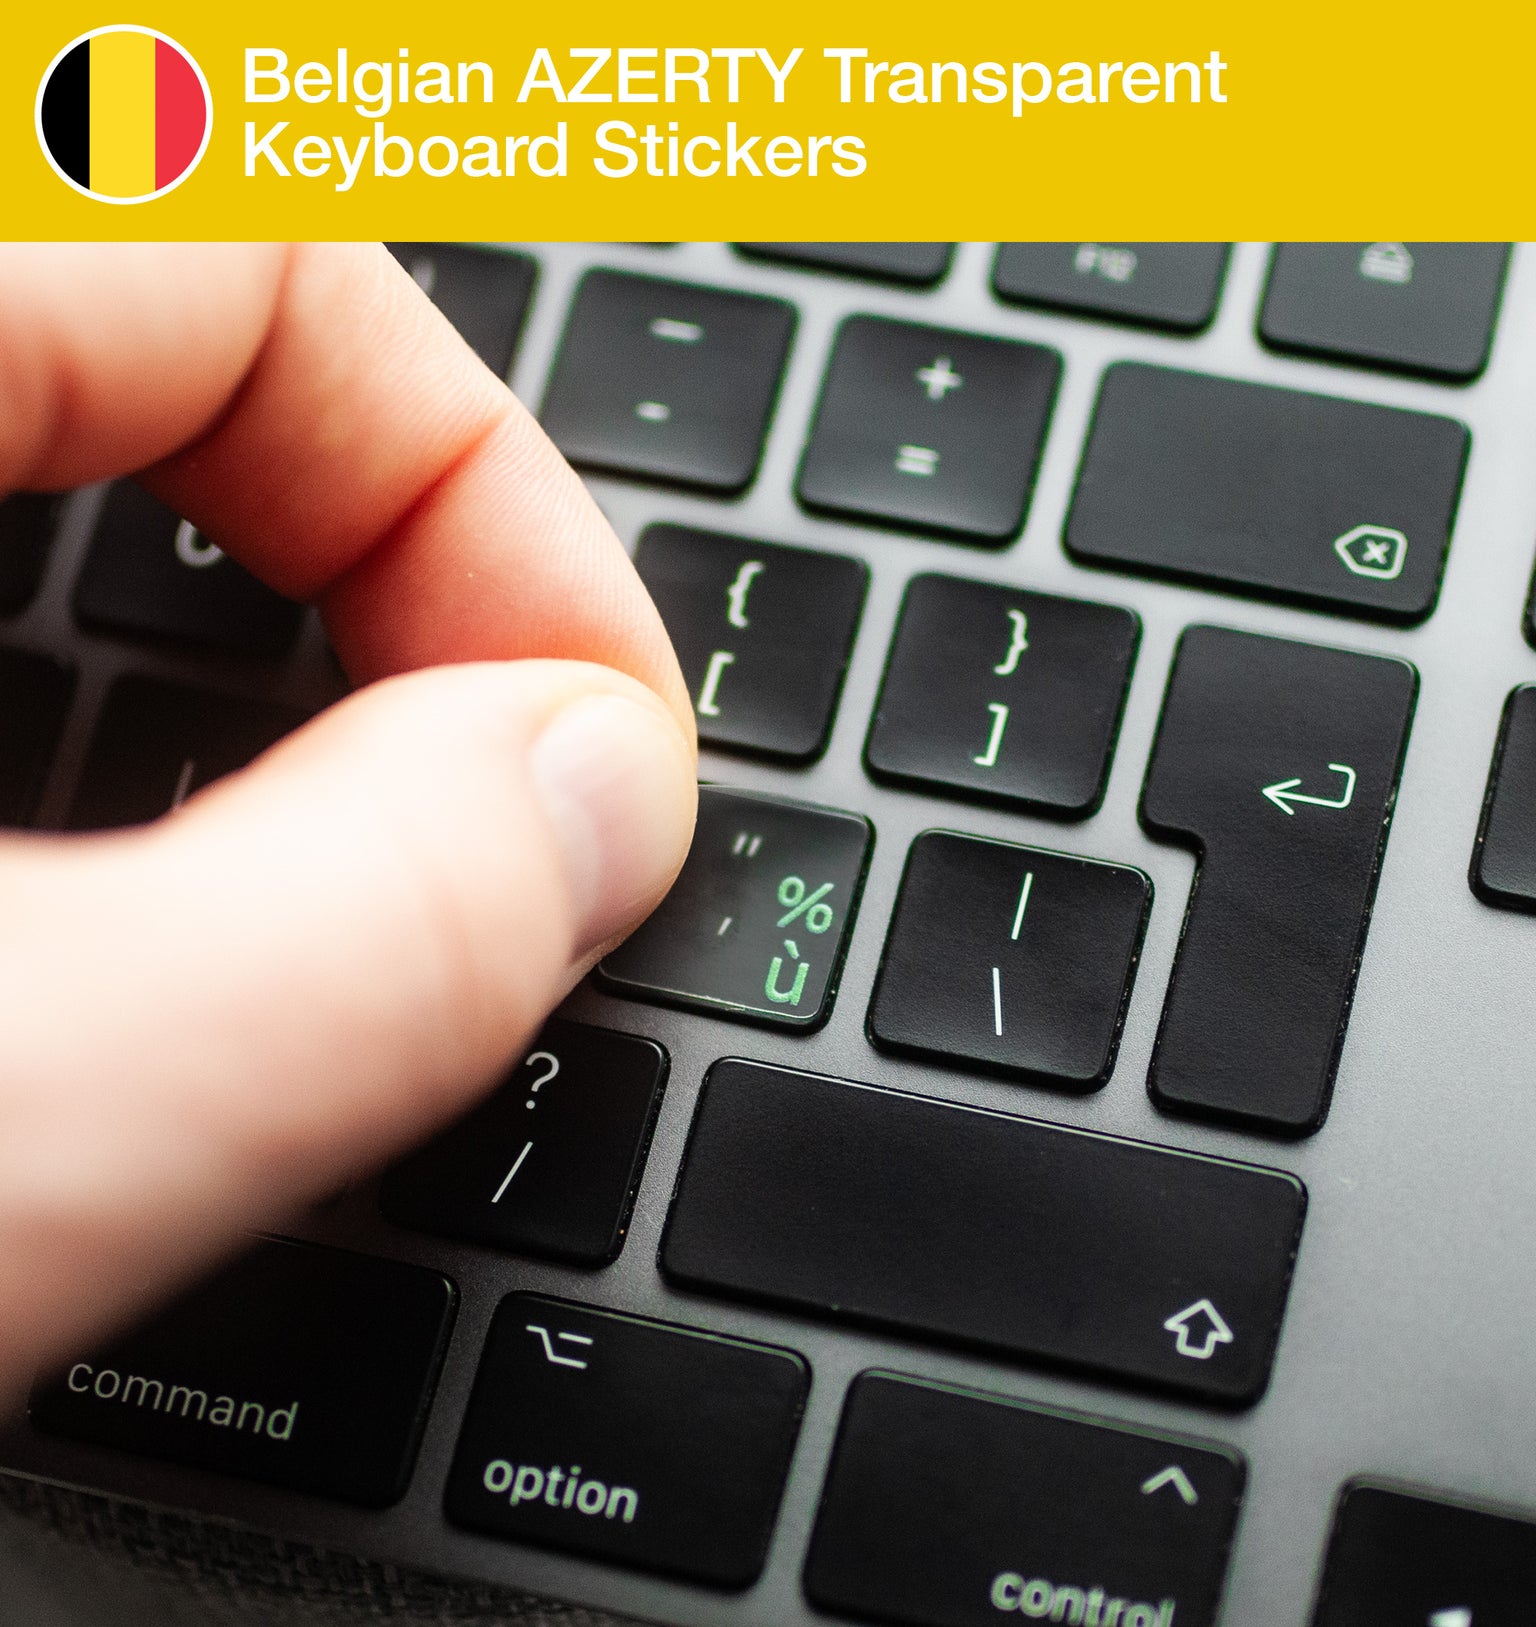 Belgian AZERTY Transparent Keyboard Stickers with Belgian keyboard layout